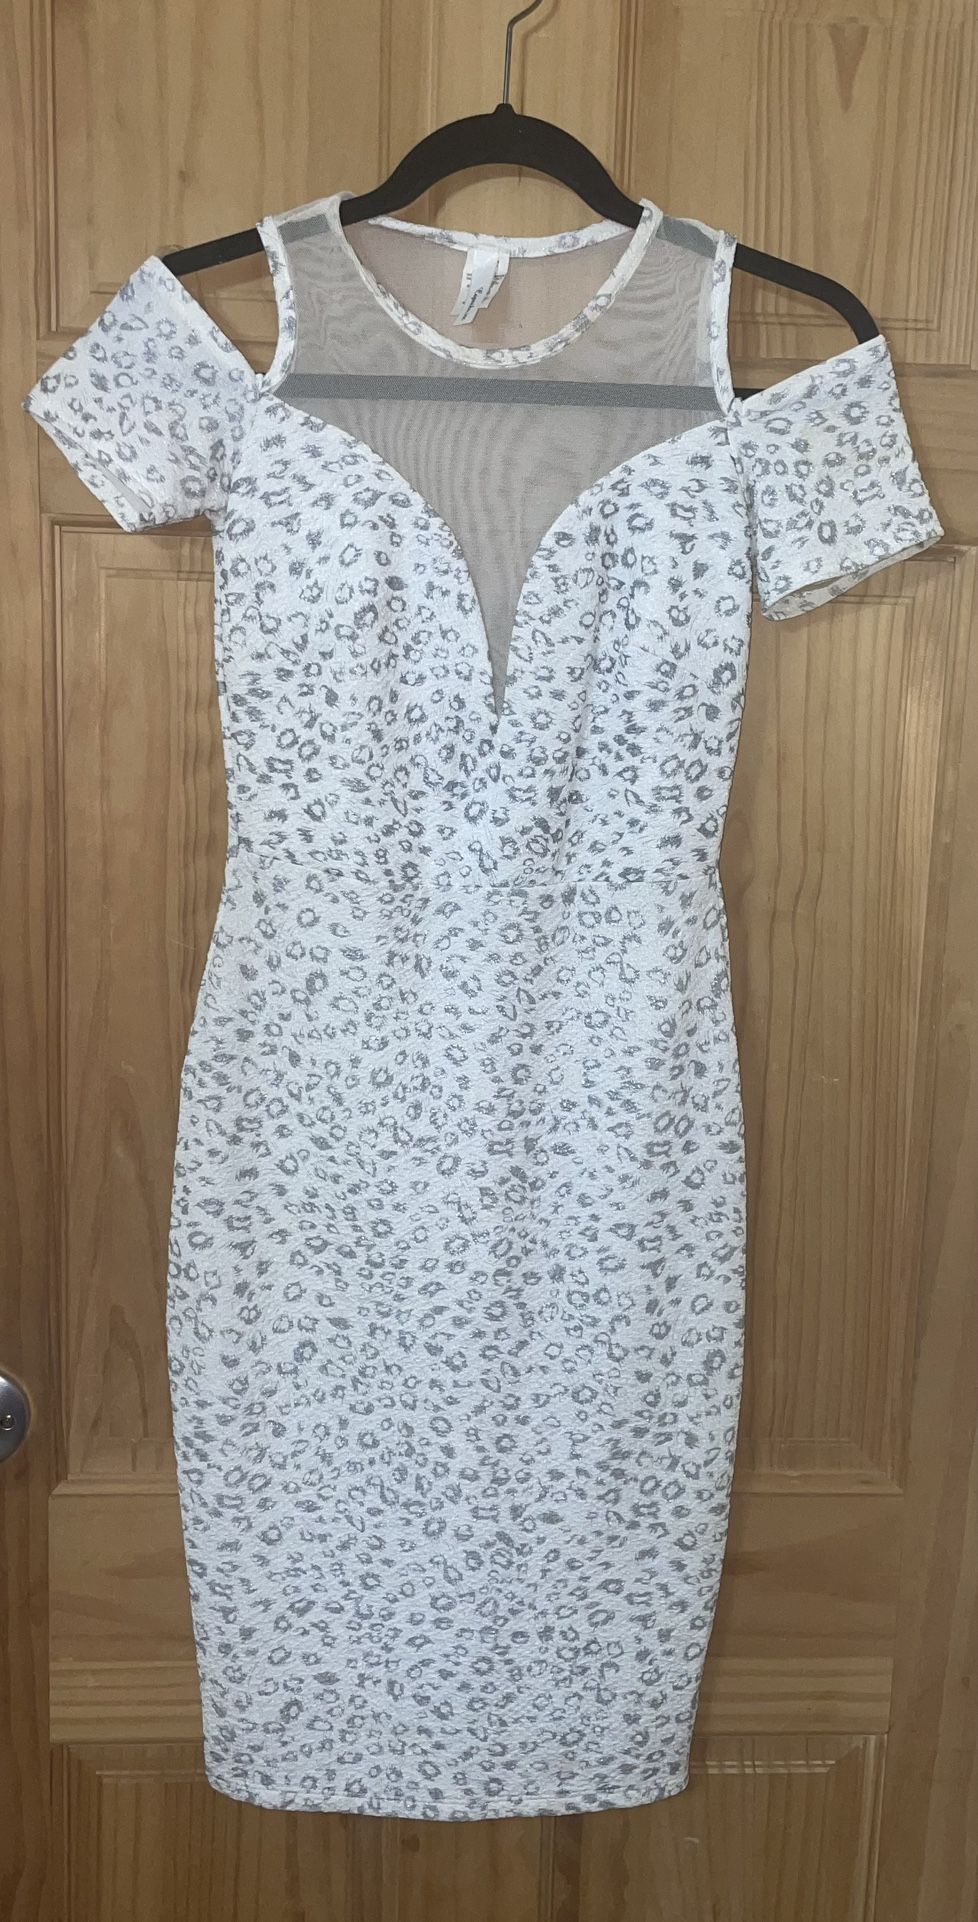 White and Gray Cheetah Print Dress